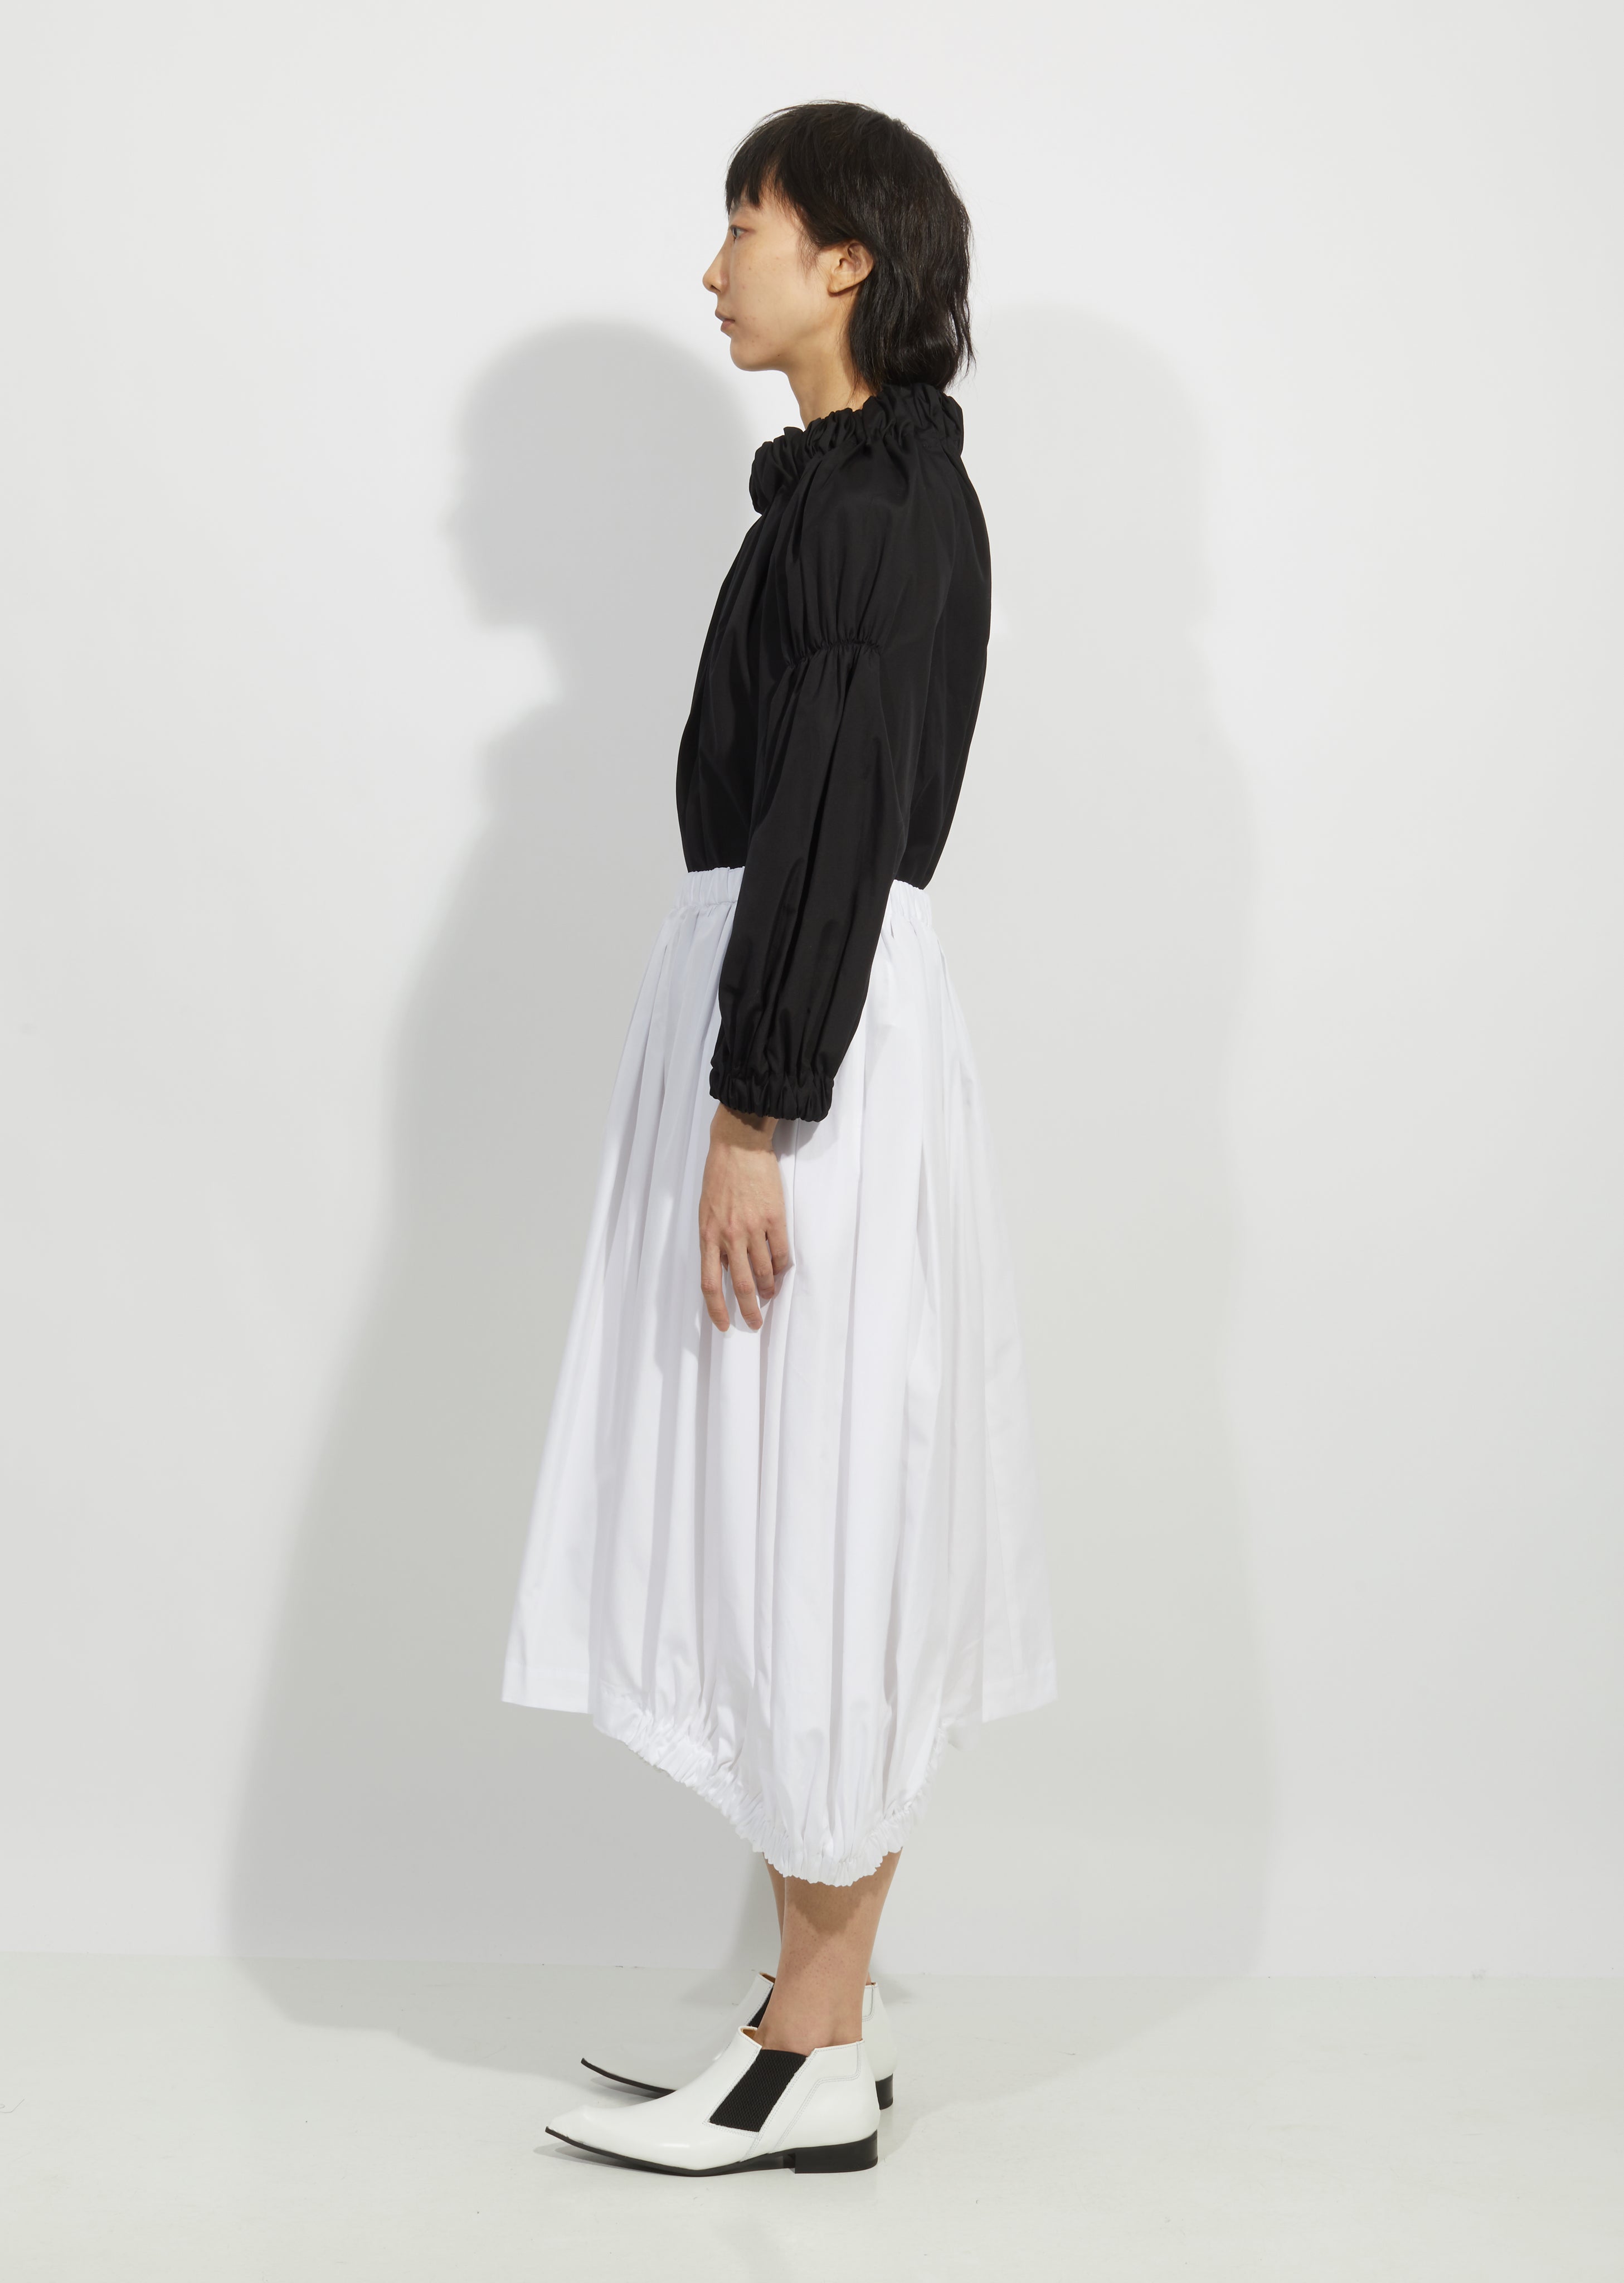 Mara Hoffman Skirts | Alejandra skirt Brown - Womens « FuenlaStock